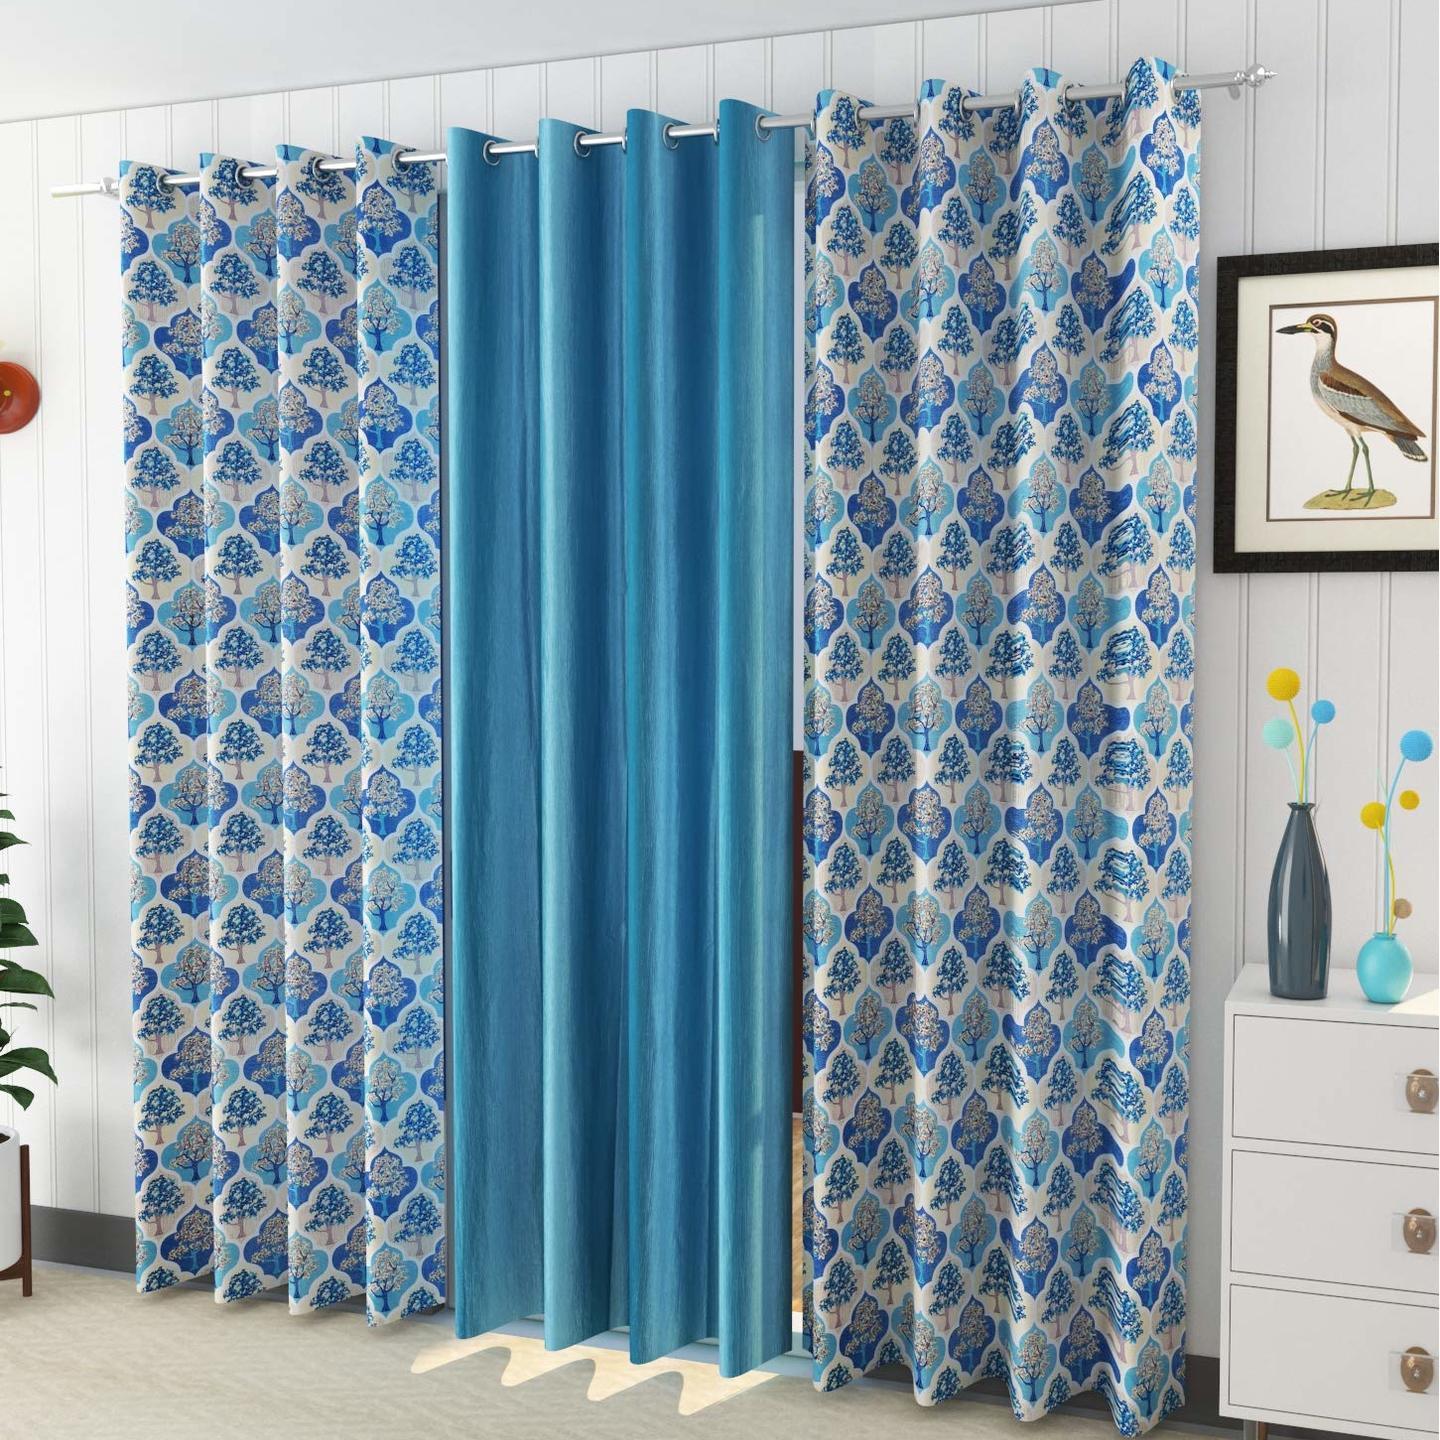 Handtex Home Curtains Polyester Tree Printed Set of 3 Pcs Aqua (2Tree+1 Plain) Size for Door 4 Feet x 7 Feet